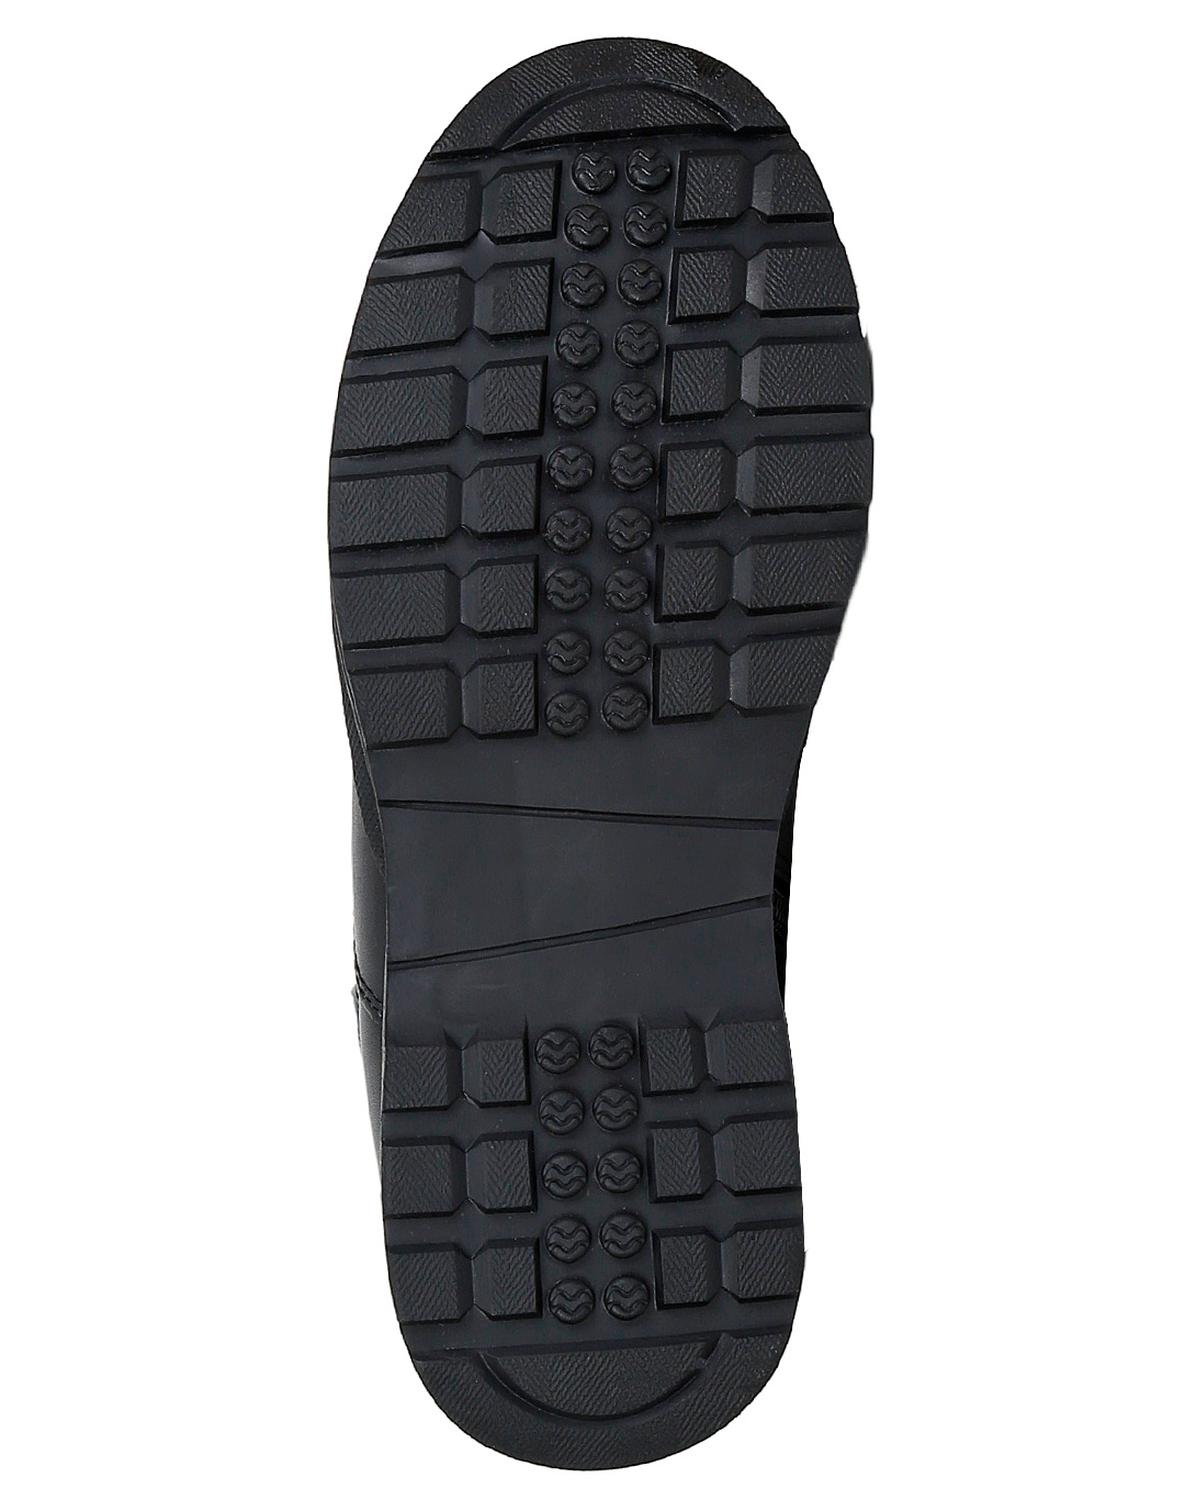 Zapato Botín Escolar Niño Rokino Negro Piel 11902607